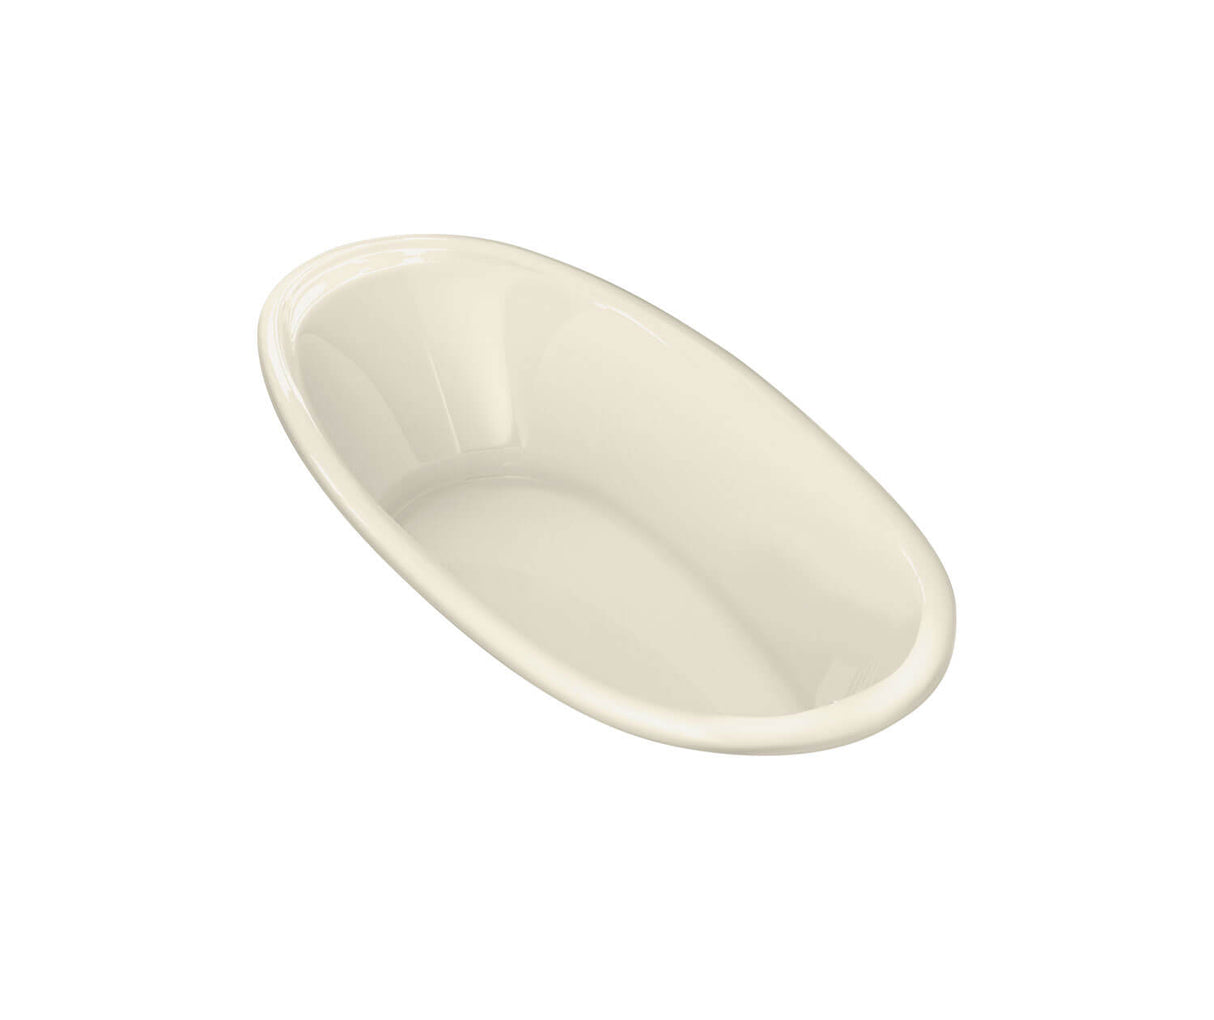 MAAX 106168-097-004 Saturna 7236 Acrylic Drop-in End Drain Combined Whirlpool & Aeroeffect Bathtub in Bone